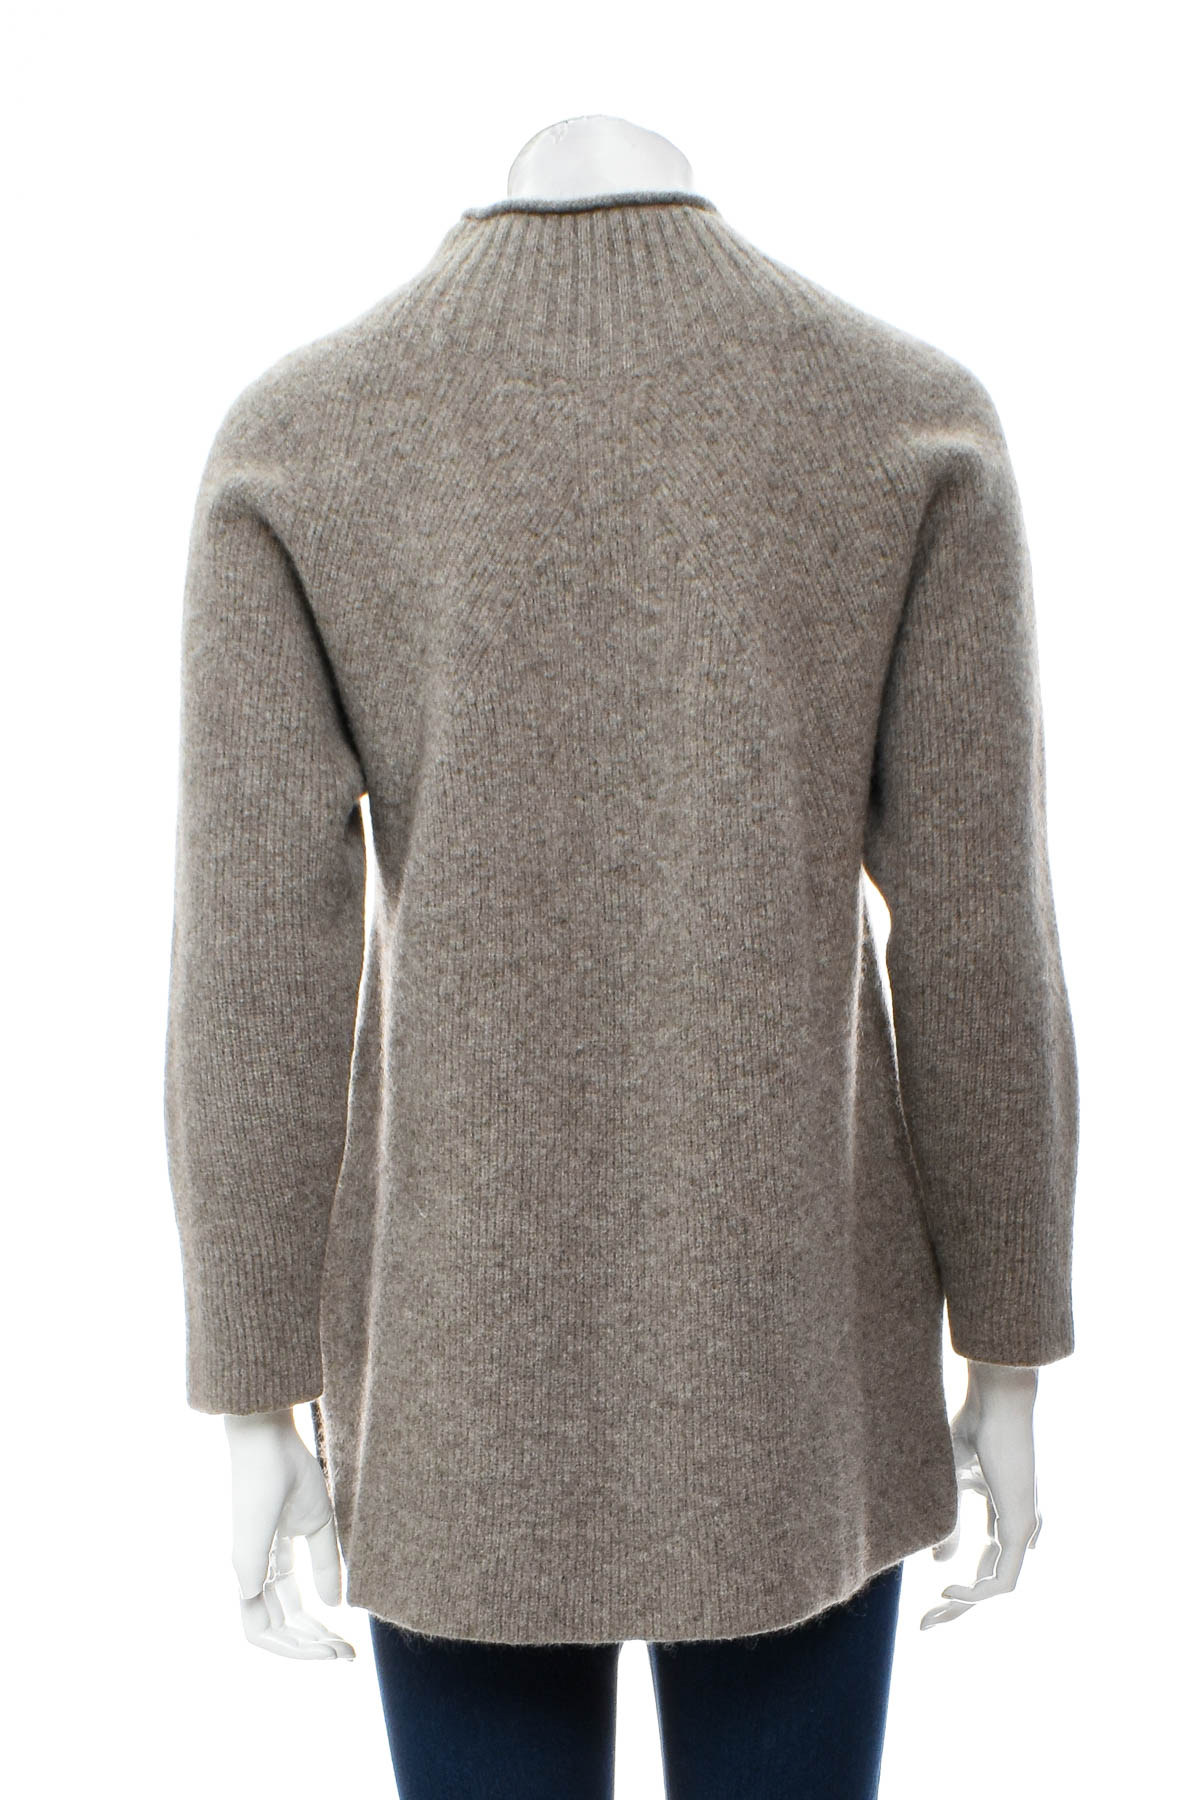 Women's sweater - Grune Erde - 1